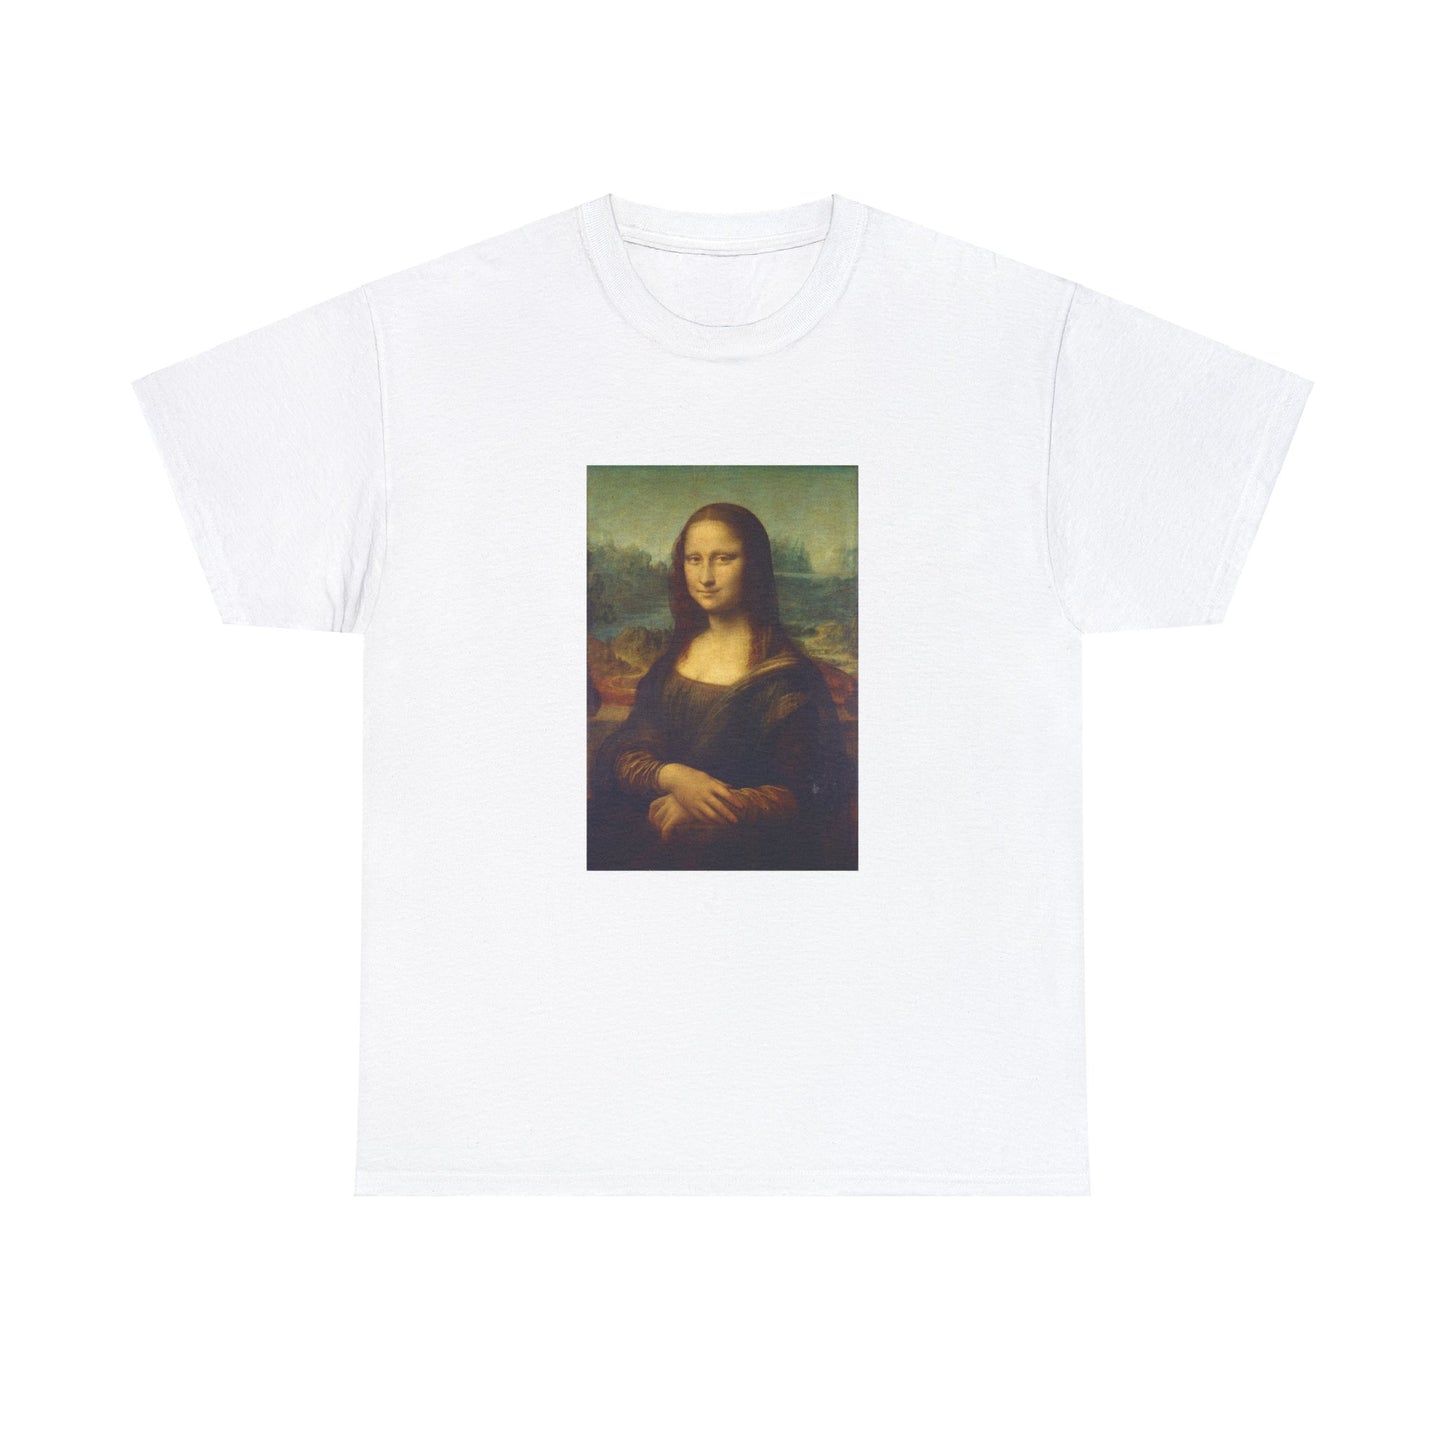 Leonardo da Vinci - Mona Lisa (1503-1519)